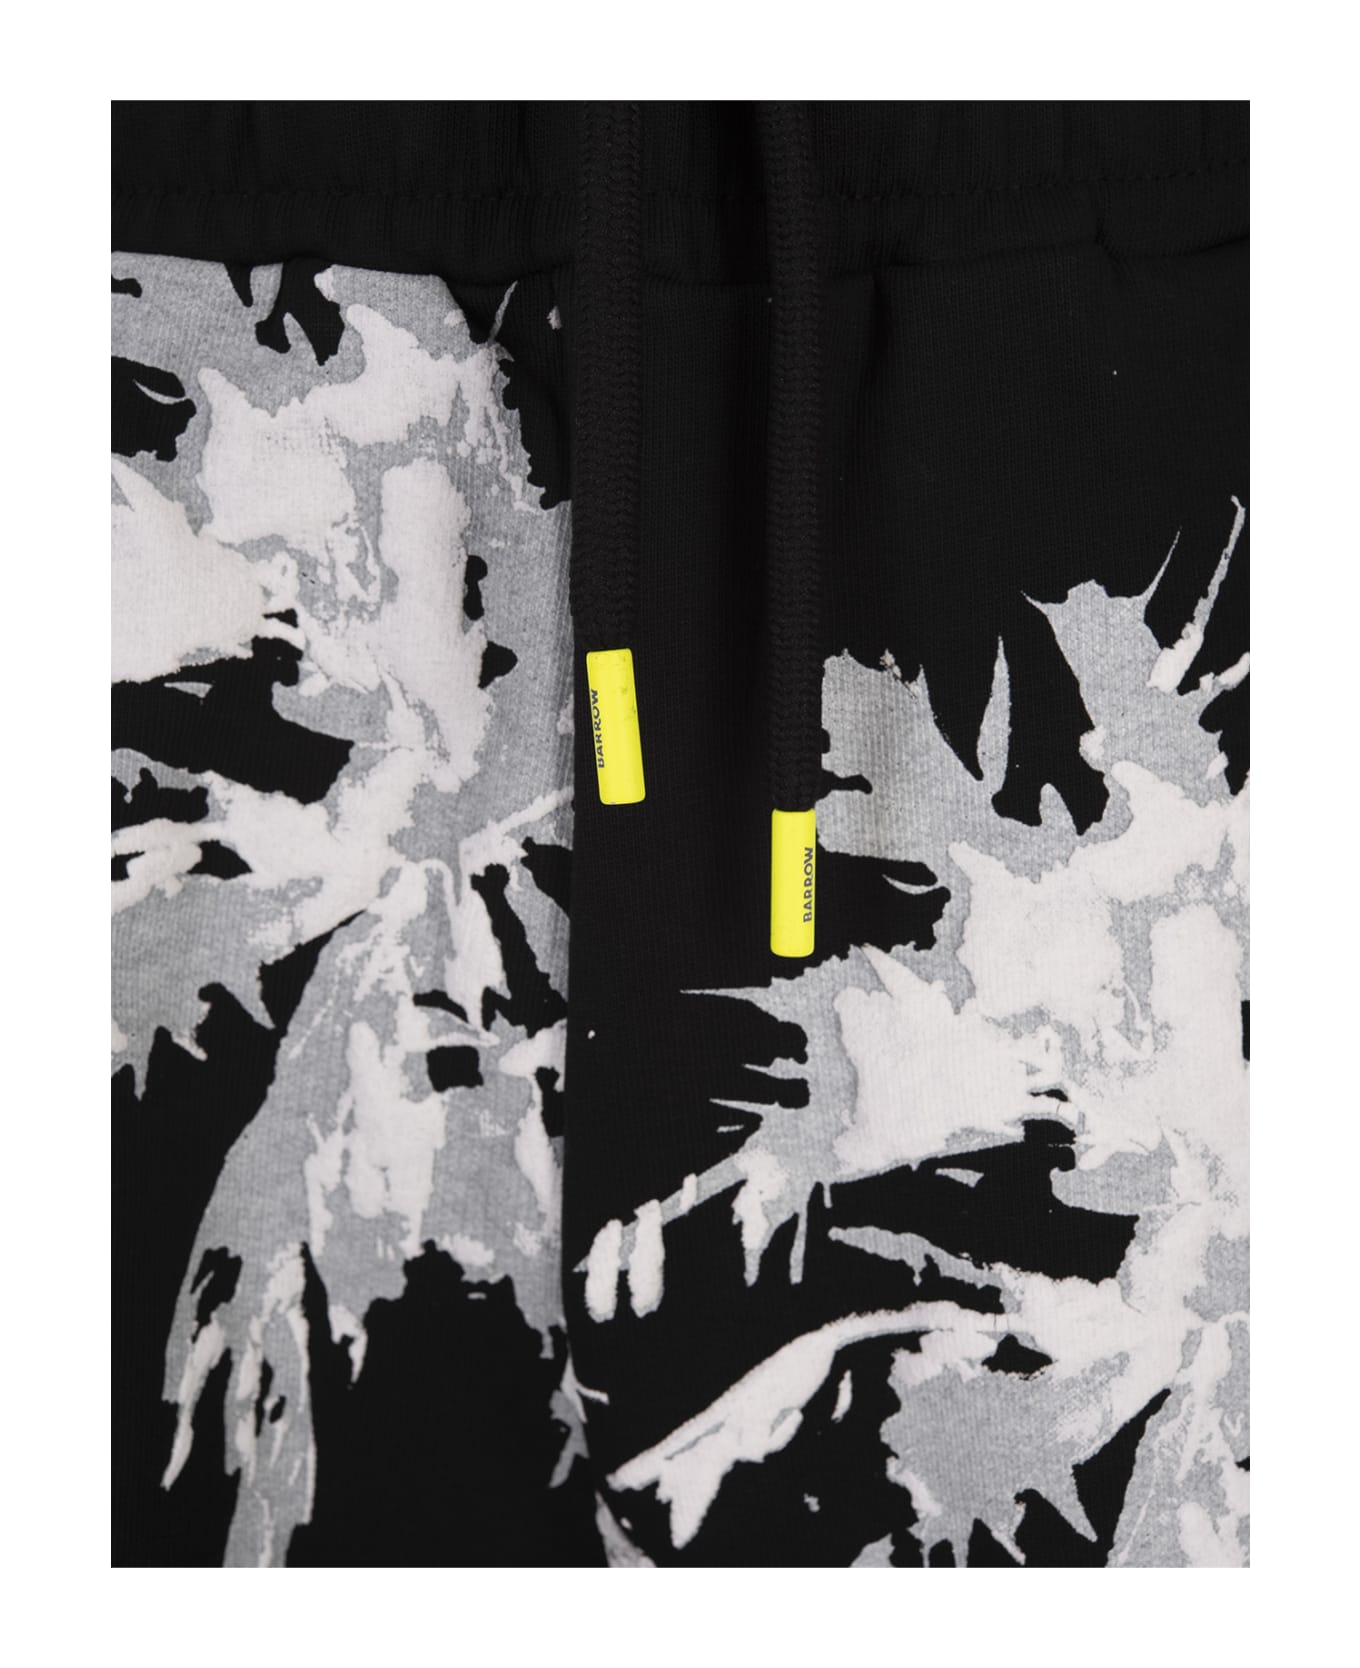 Barrow Black Shorts With Palms Graphic Print - Black